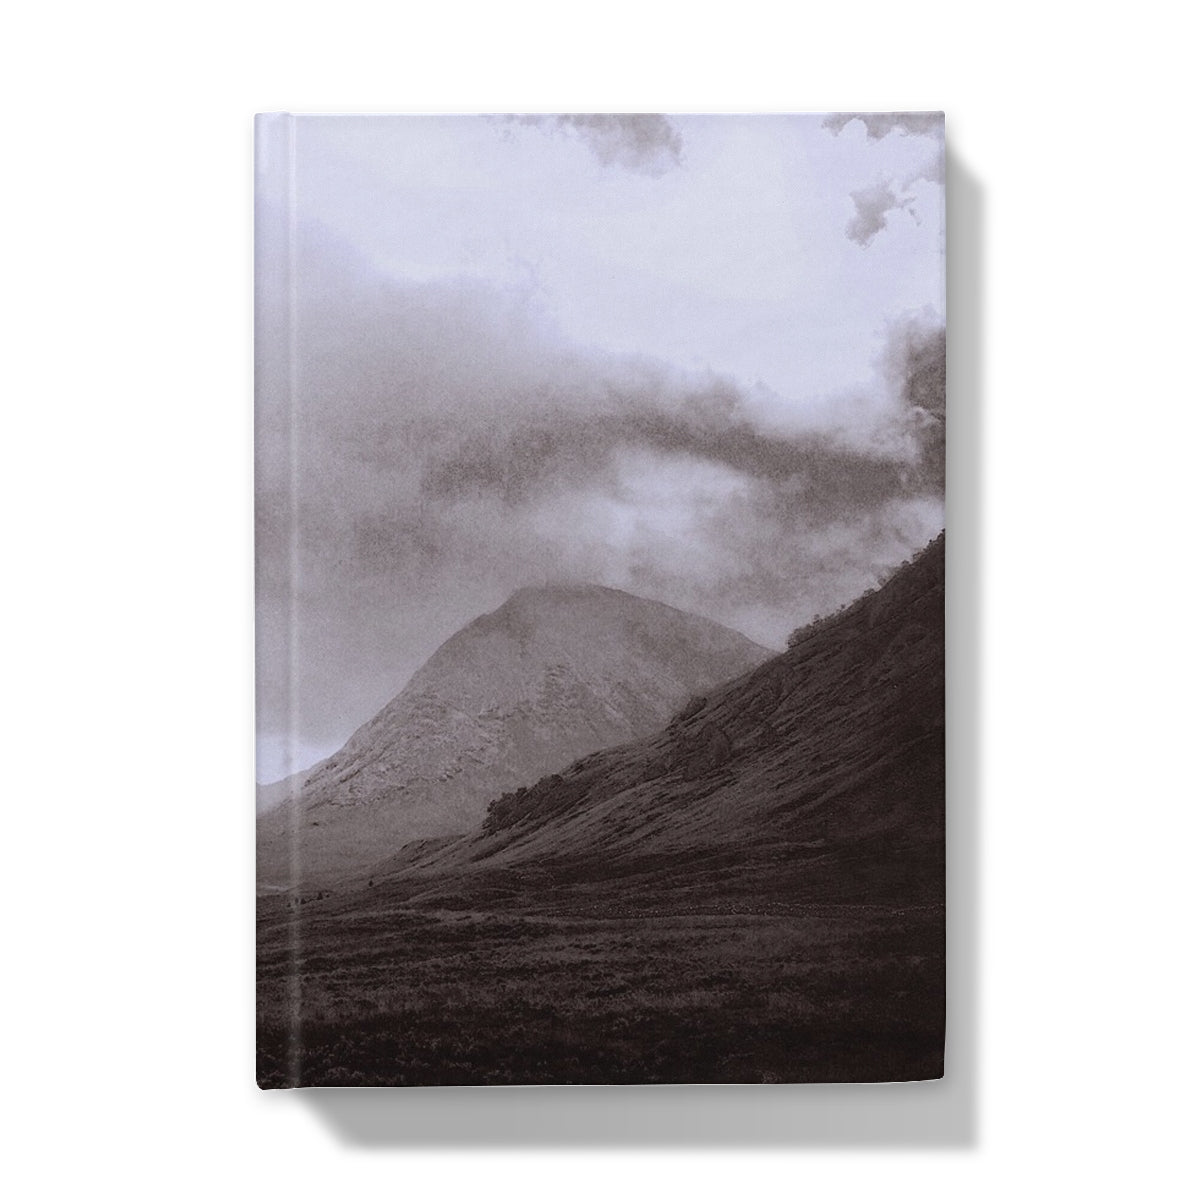 Glencoe Mist Art Gifts Hardback Journal-Journals & Notebooks-Glencoe Art Gallery-A4-Plain-Paintings, Prints, Homeware, Art Gifts From Scotland By Scottish Artist Kevin Hunter